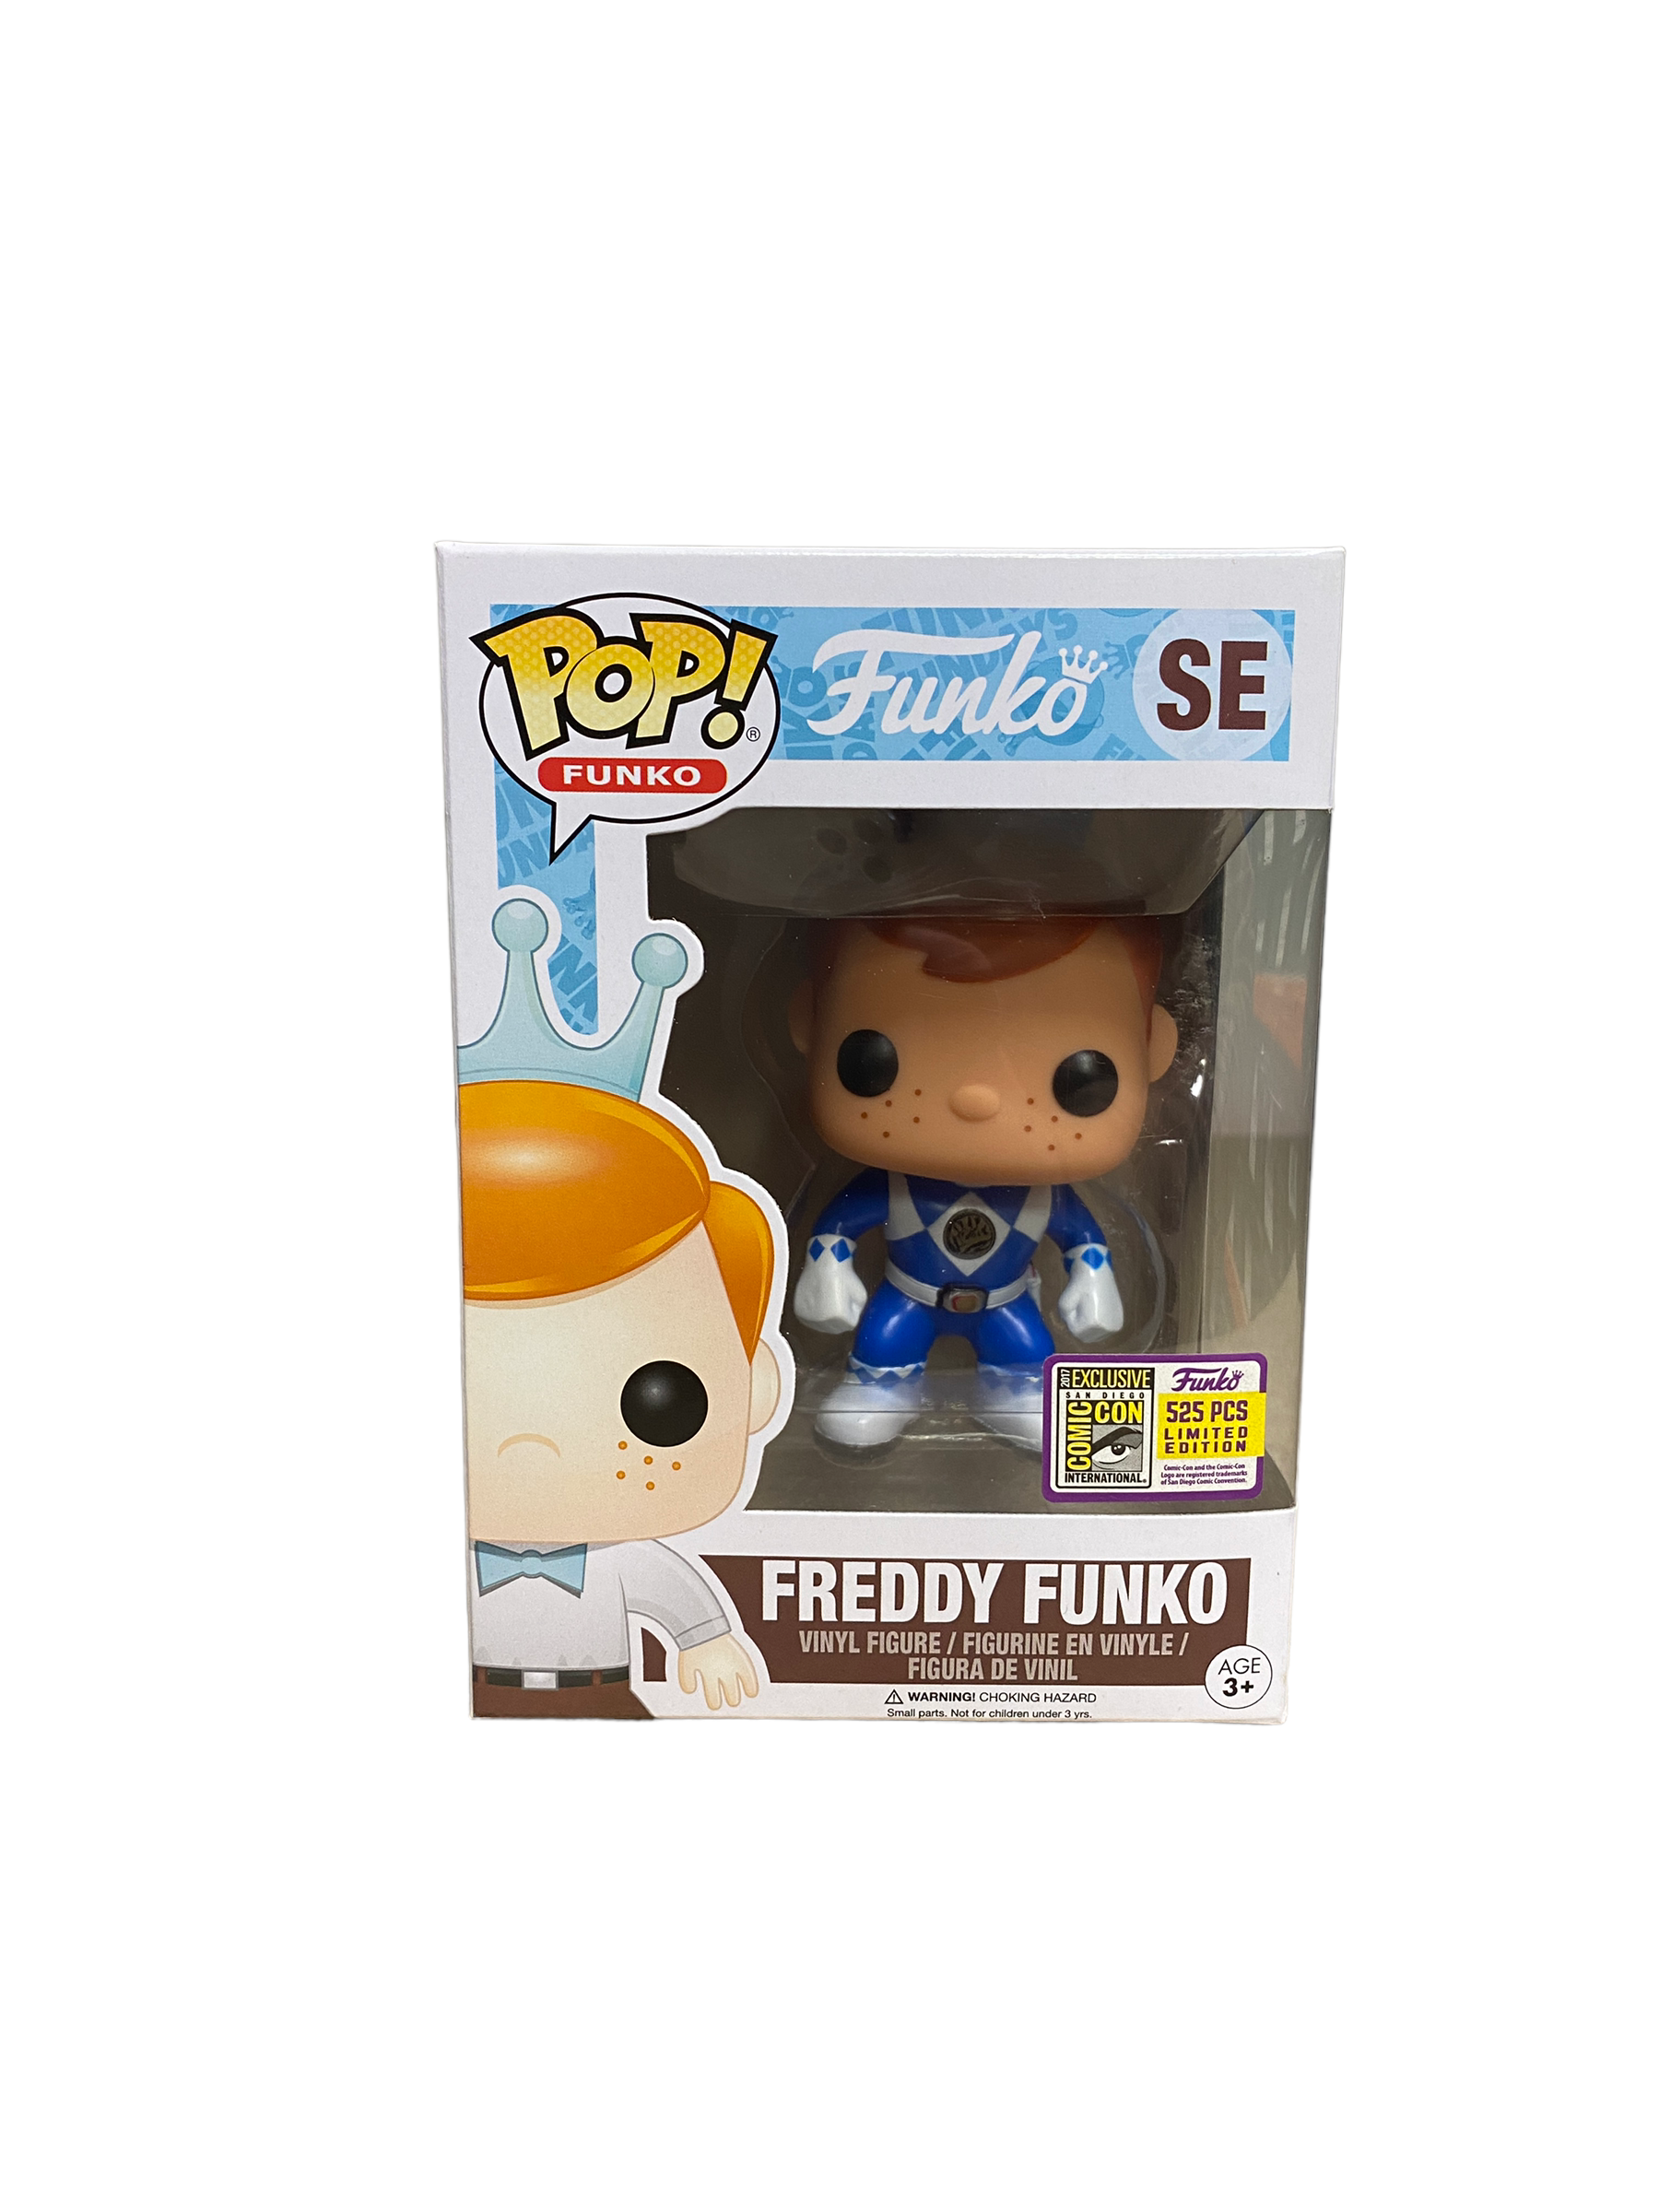 Freddy Funko as Blue Ranger Funko Pop! - SDCC 2017 Exclusive LE525 Pcs - Condition 8.75/10